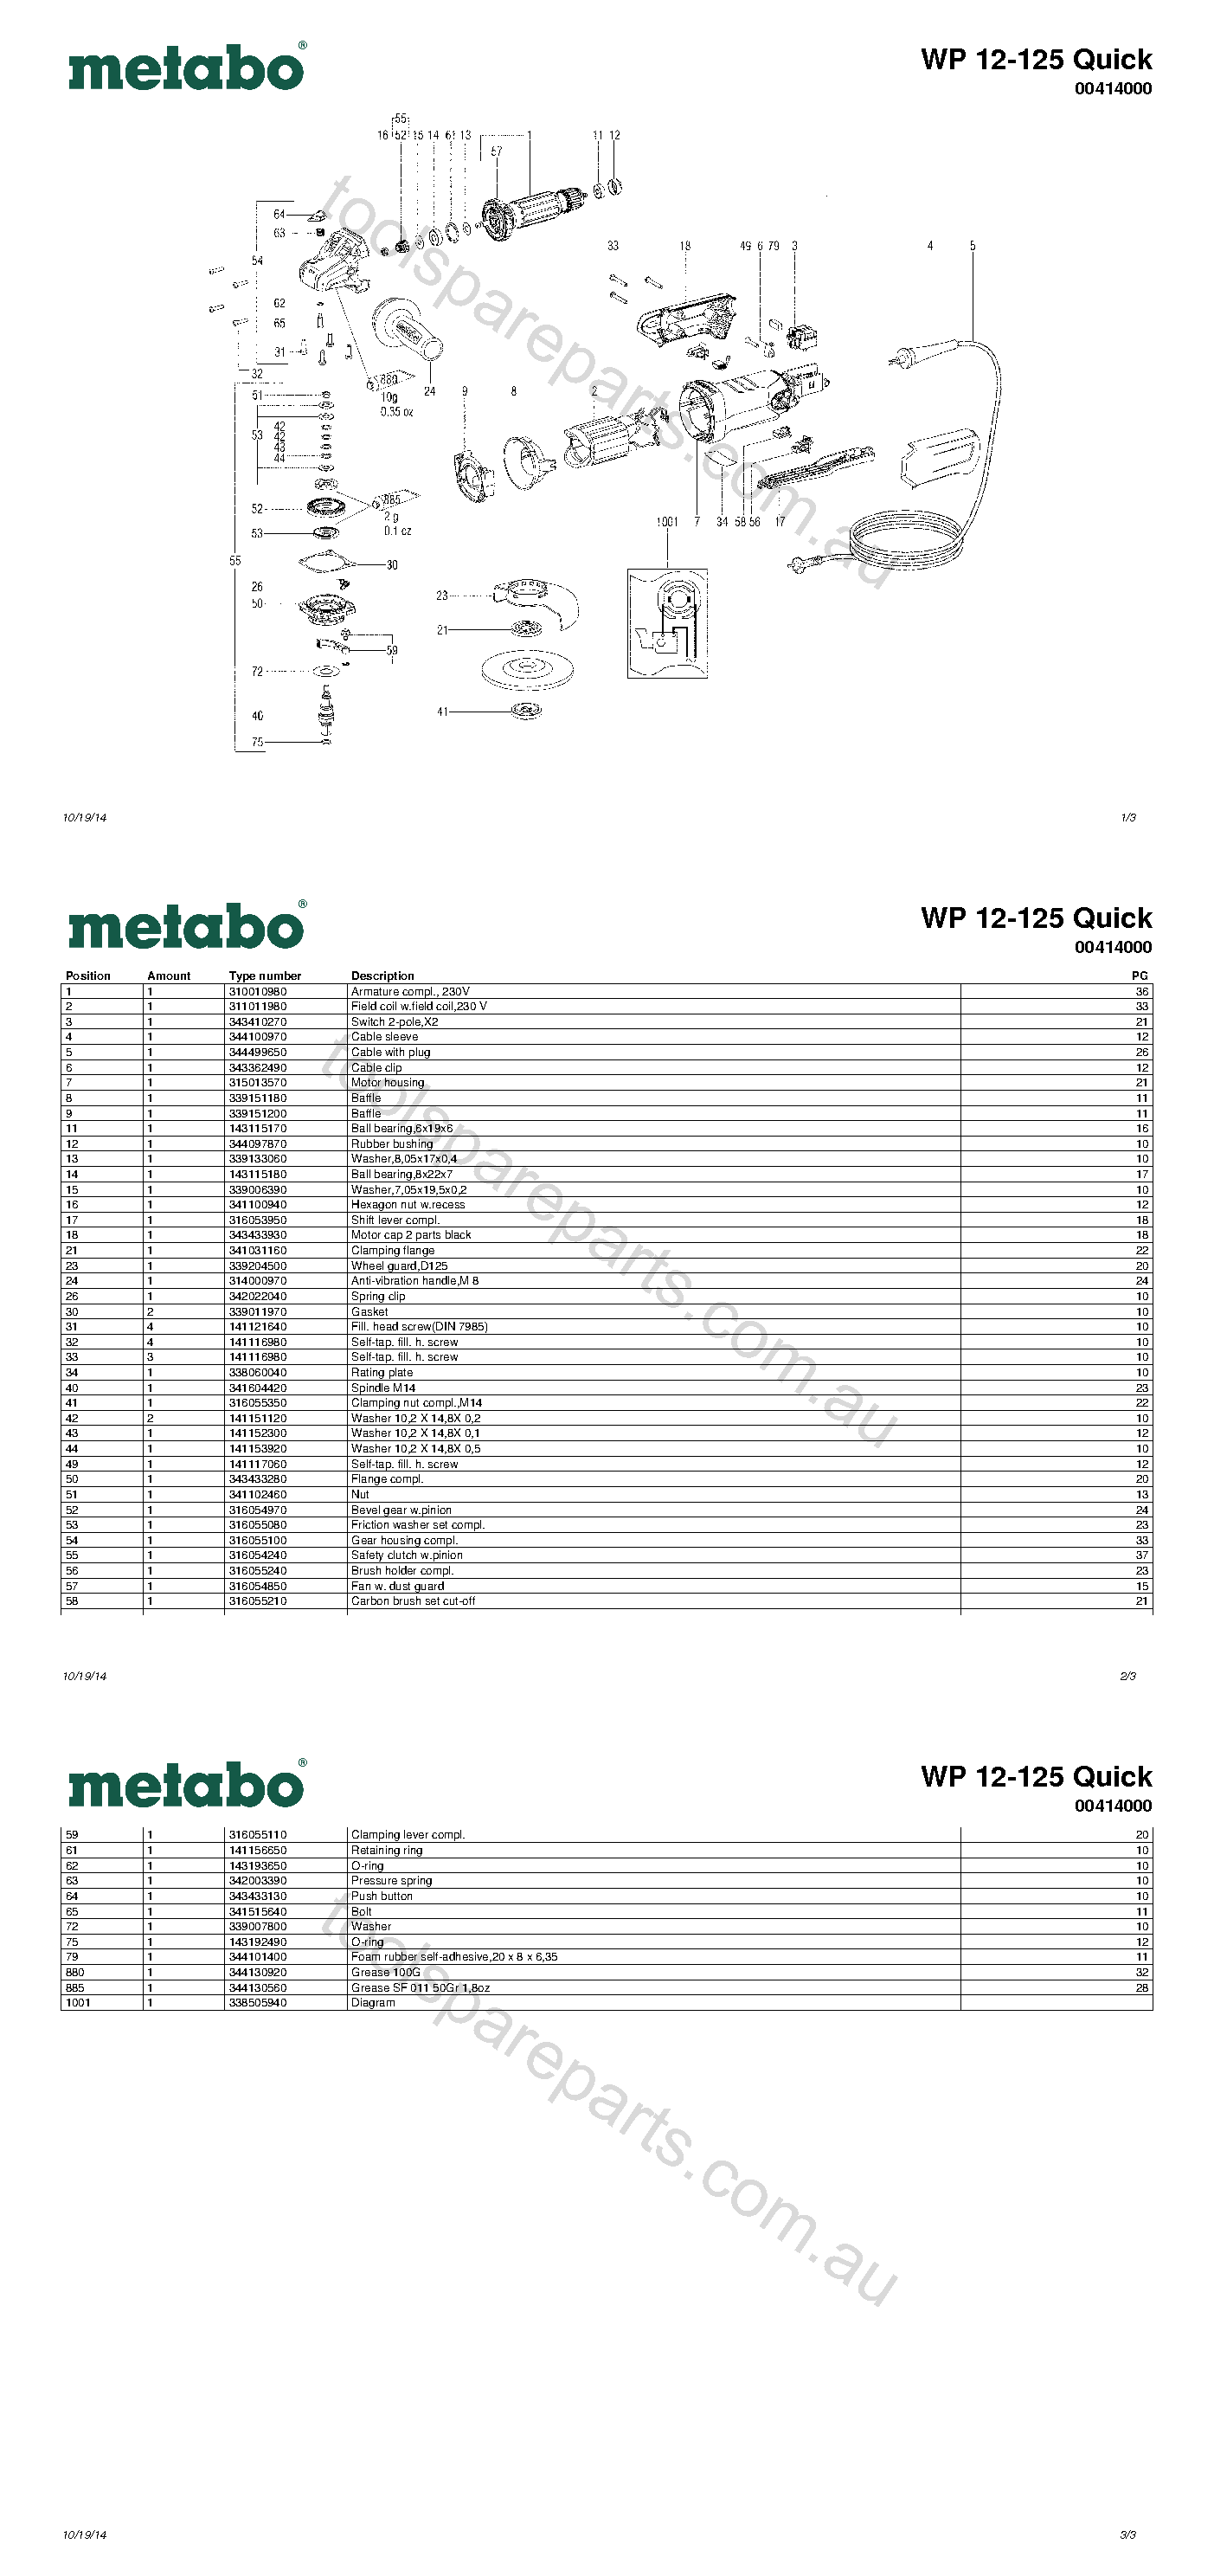 Metabo WP 12-125 Quick 00414000  Diagram 1